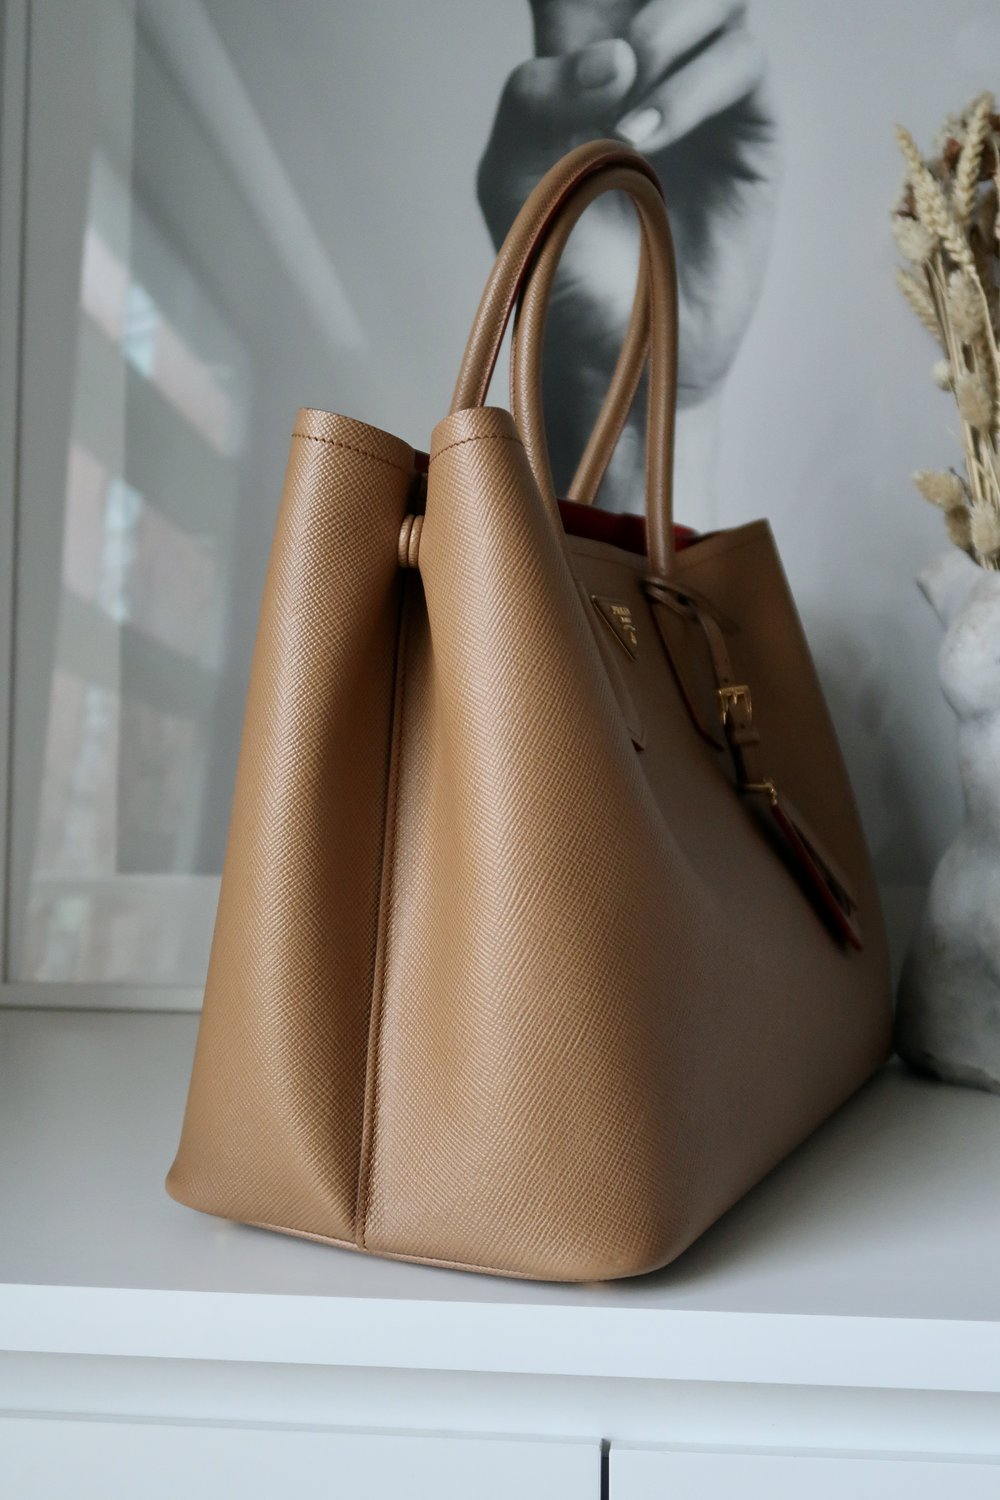 Prada Saffiano Cuir Small Double Bag, Blush (Cammeo)